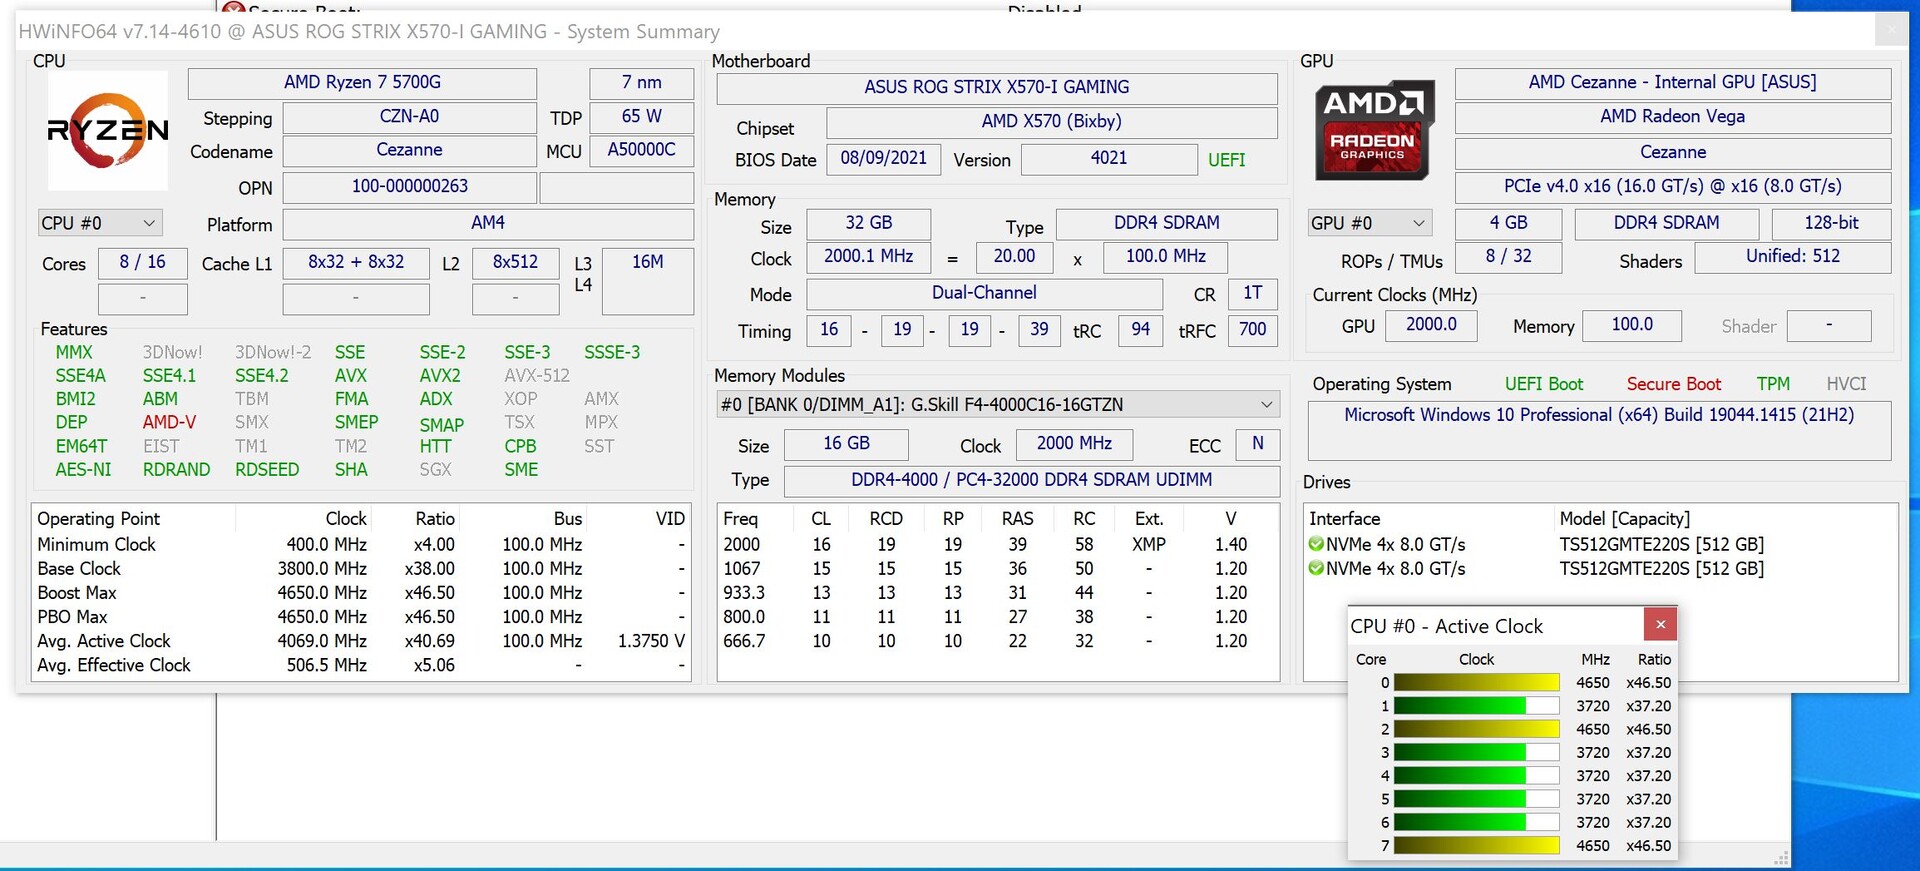 AMD Ryzen 7 5700G in review: 8-core desktop APU based on Zen3 with